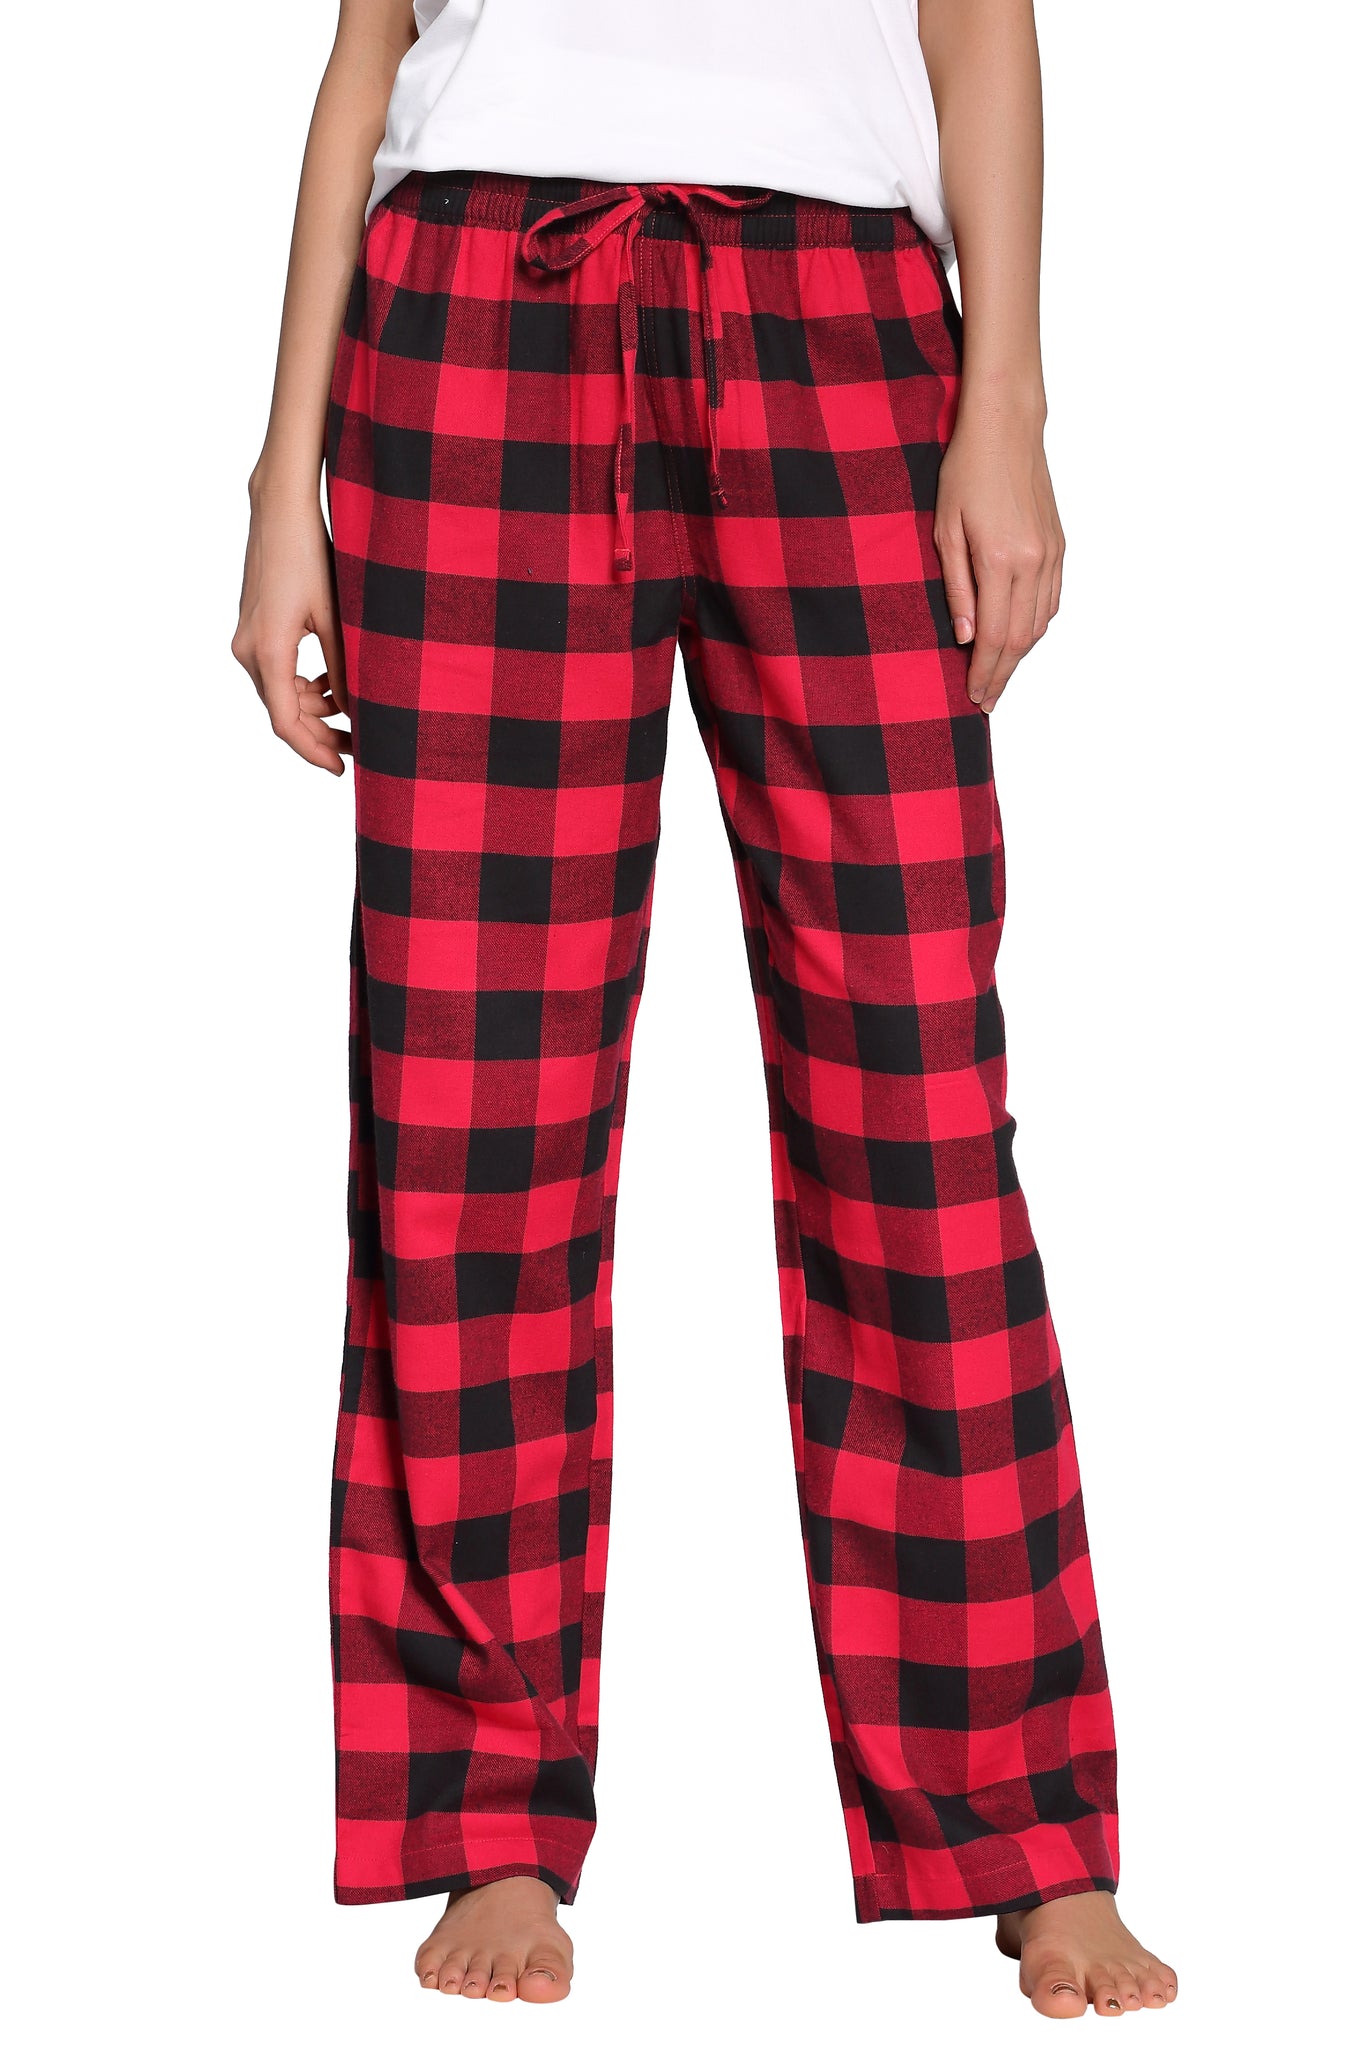 FYFHA - Women's Flannel Pajama Pants - Puddle Bear